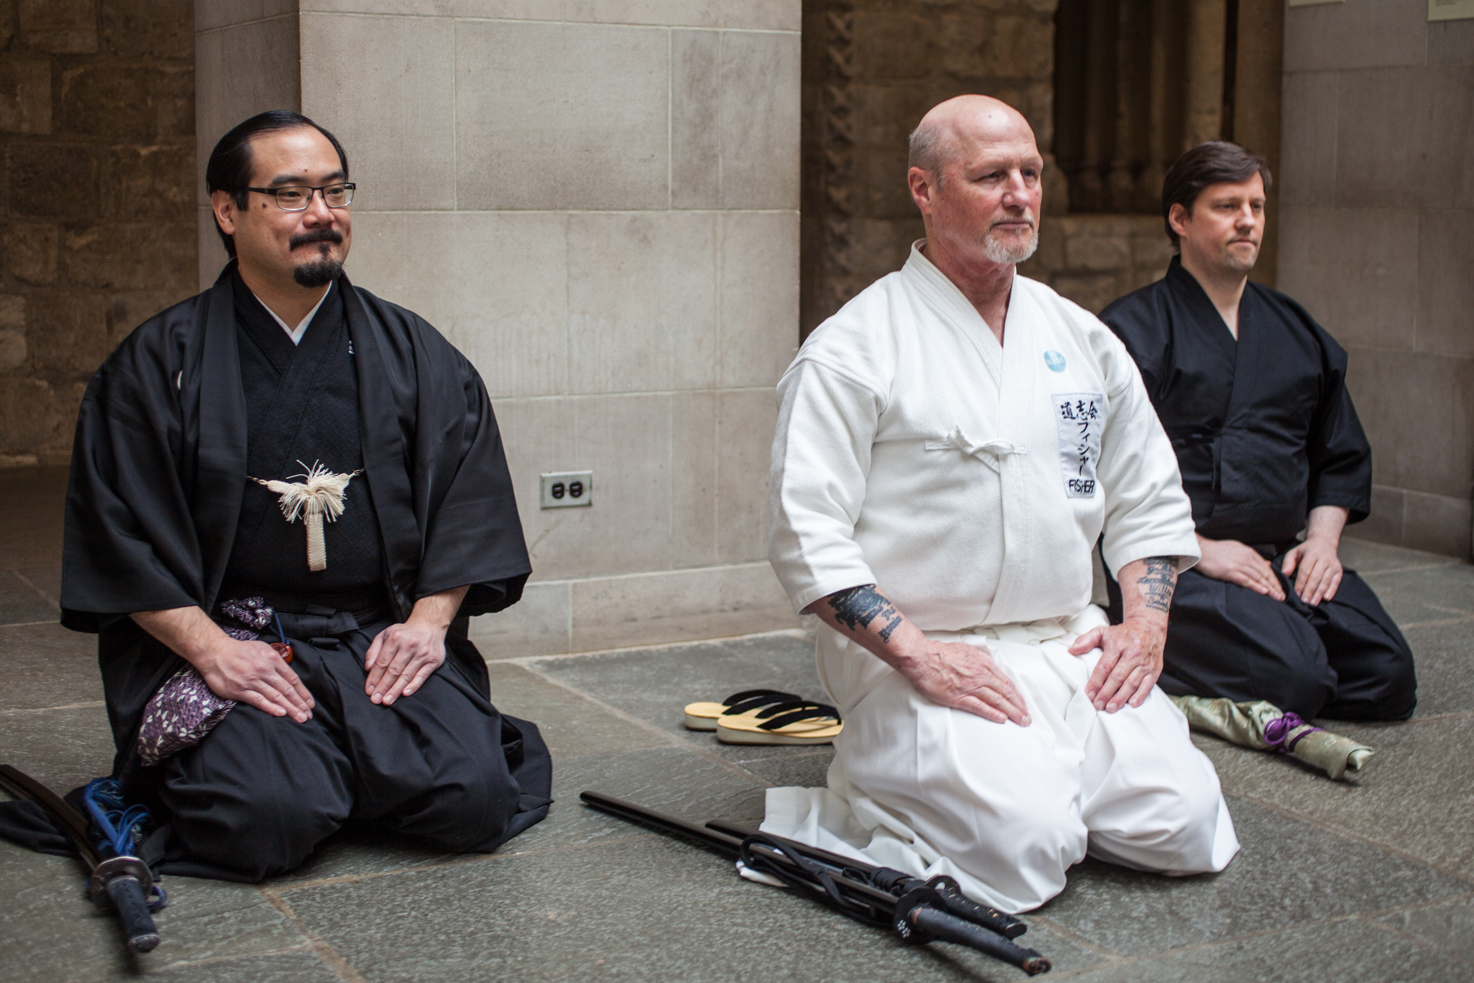 Three demonstrators dressed in samurai costume kneel together with their swords (katana) laid on the floor